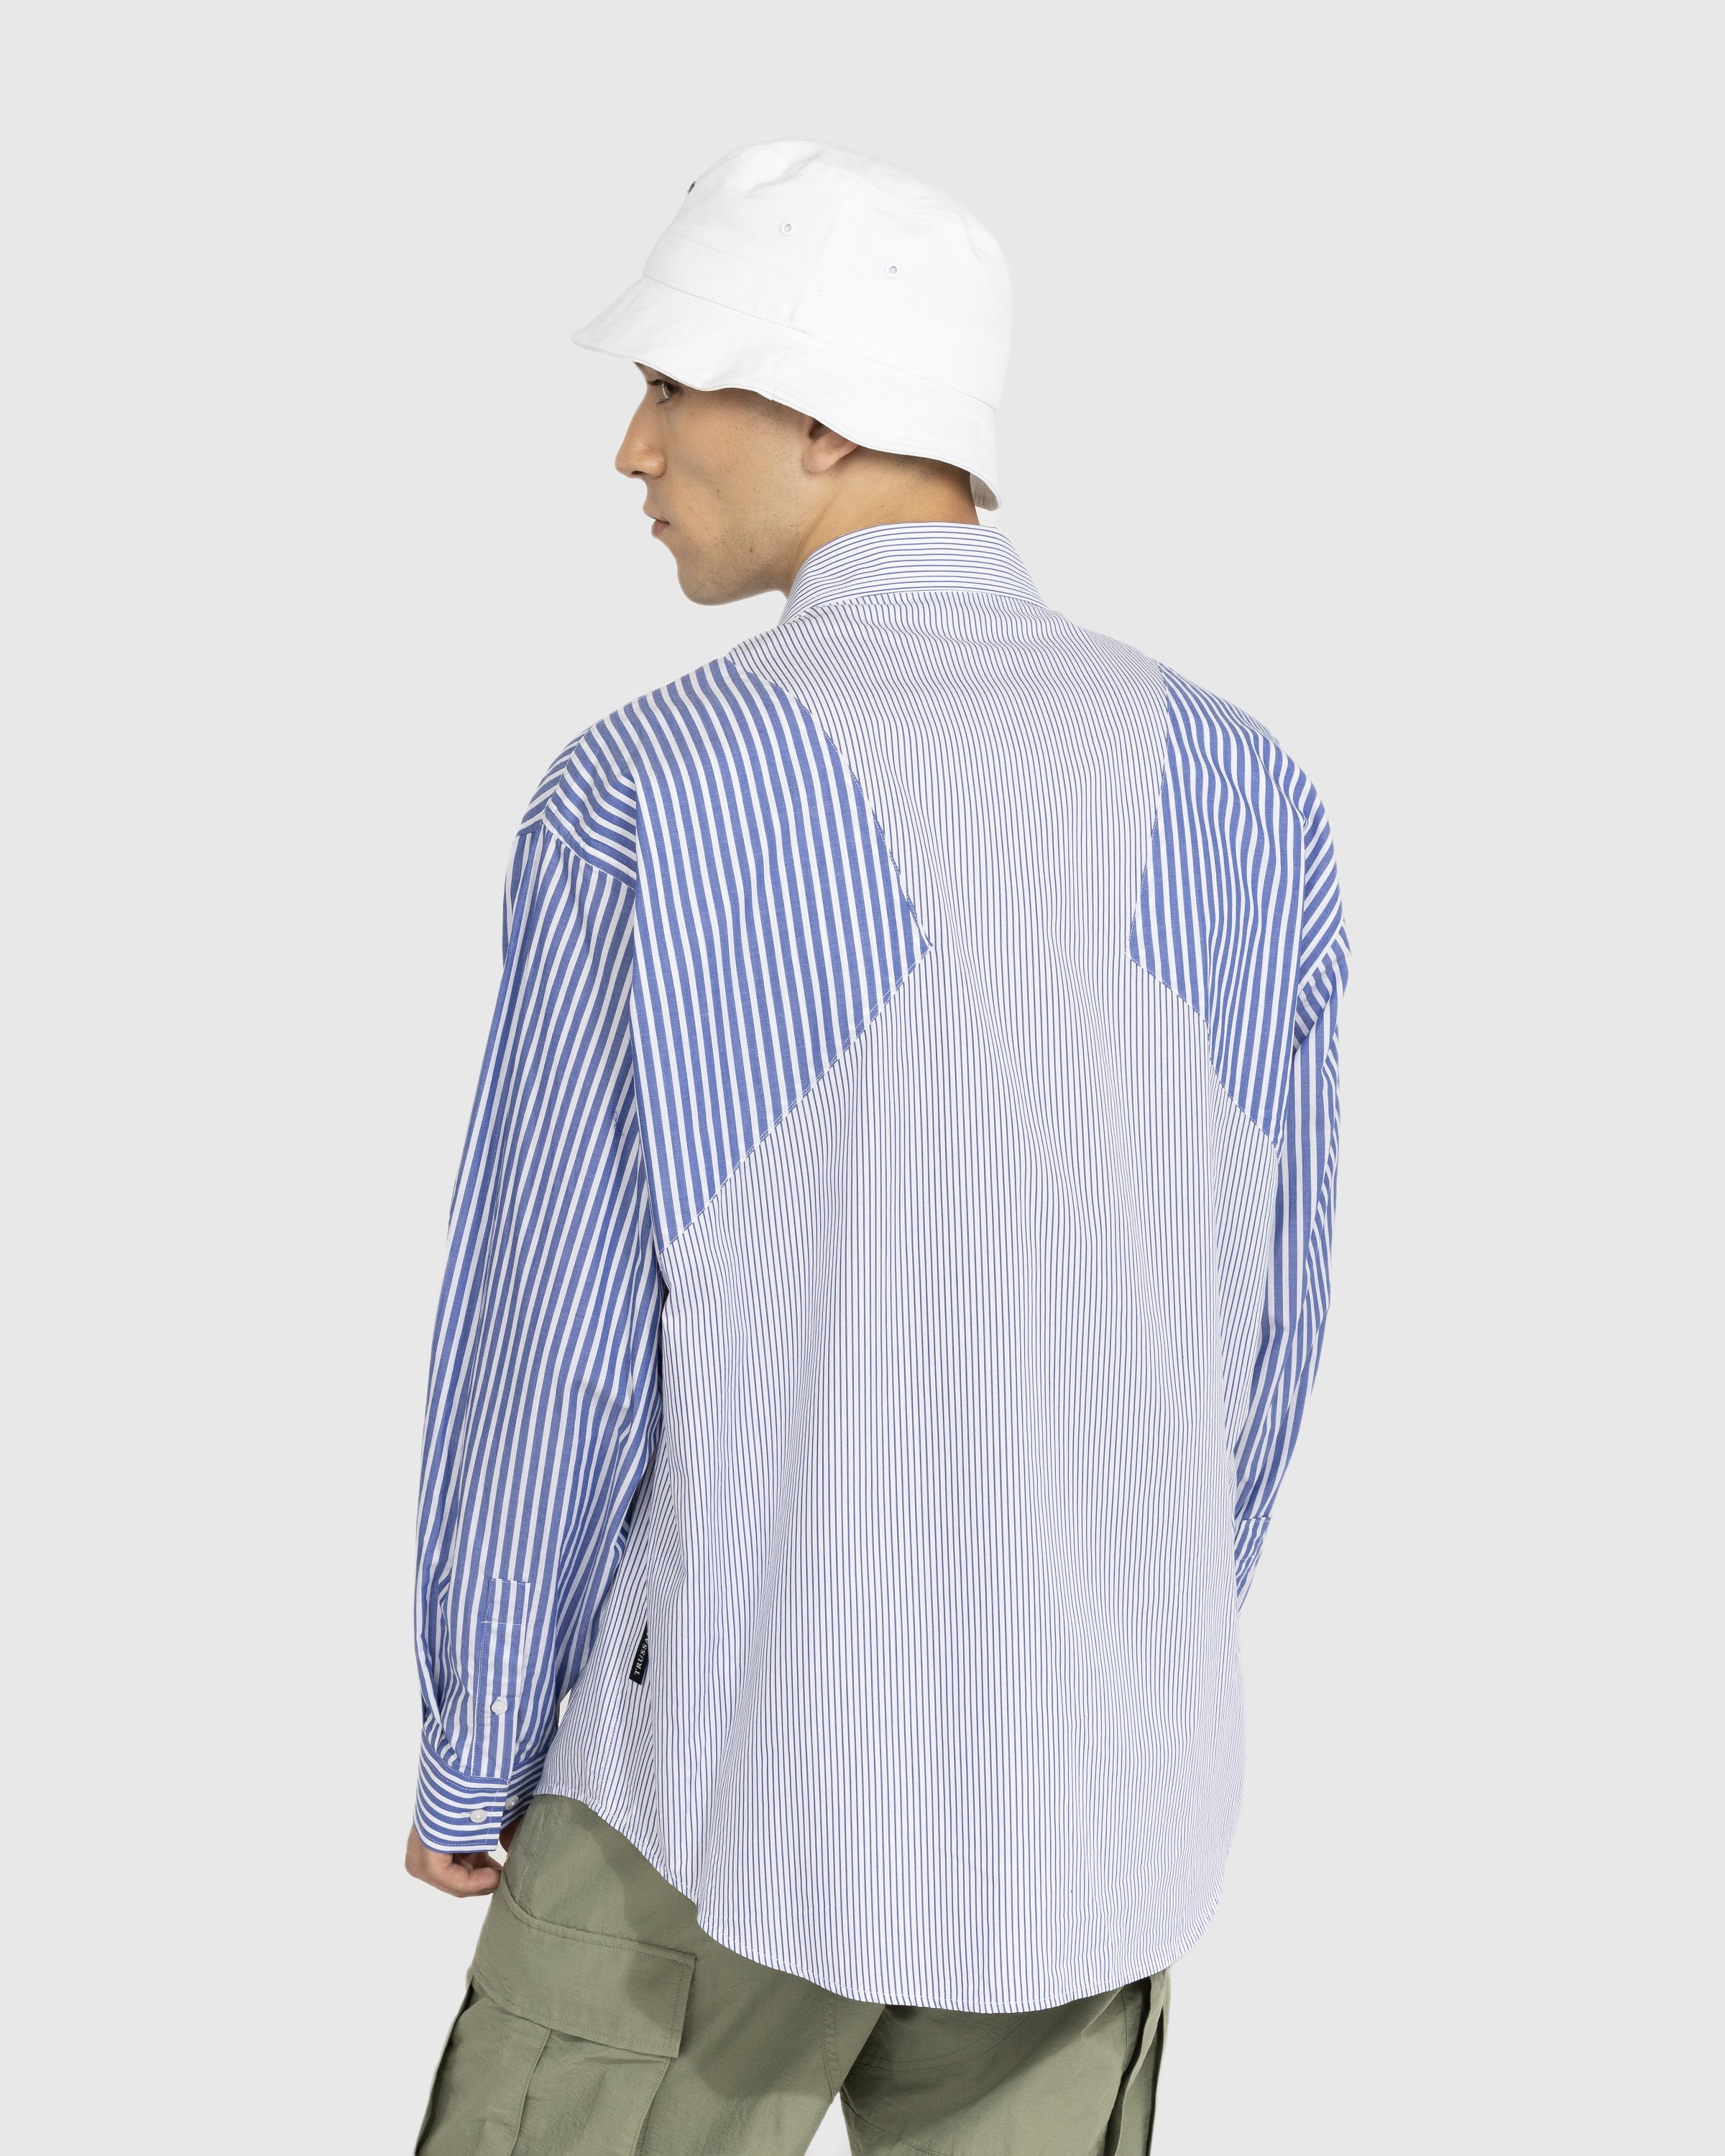 Trussardi - Shirt Cotton Mix Stripes - Clothing - Blue - Image 3